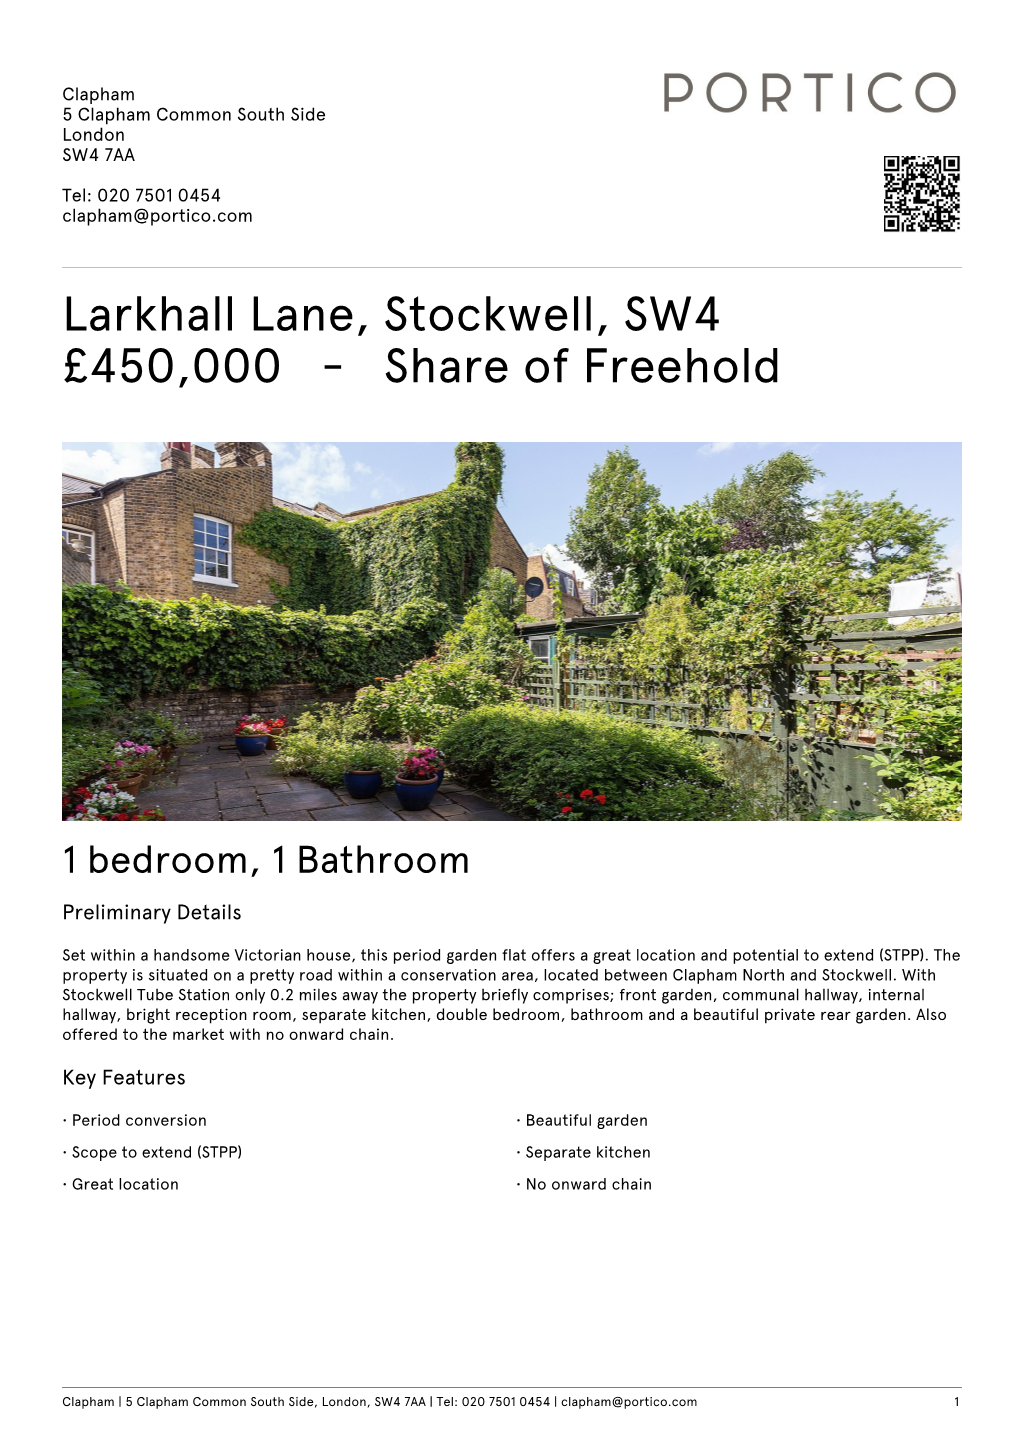 Larkhall Lane, Stockwell, SW4 £450000